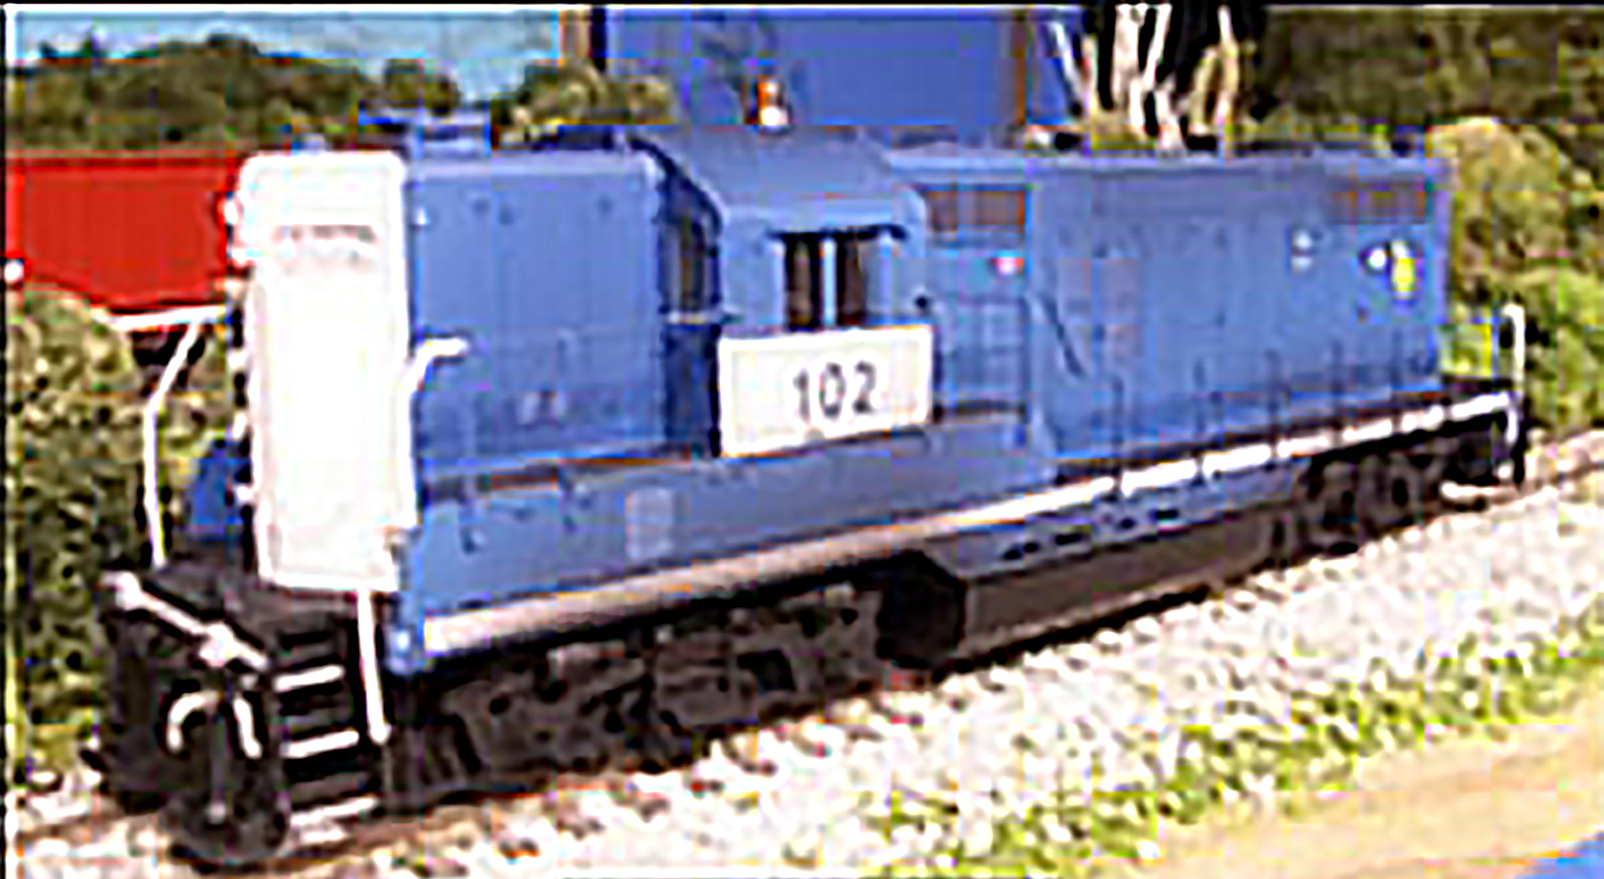 Train 102